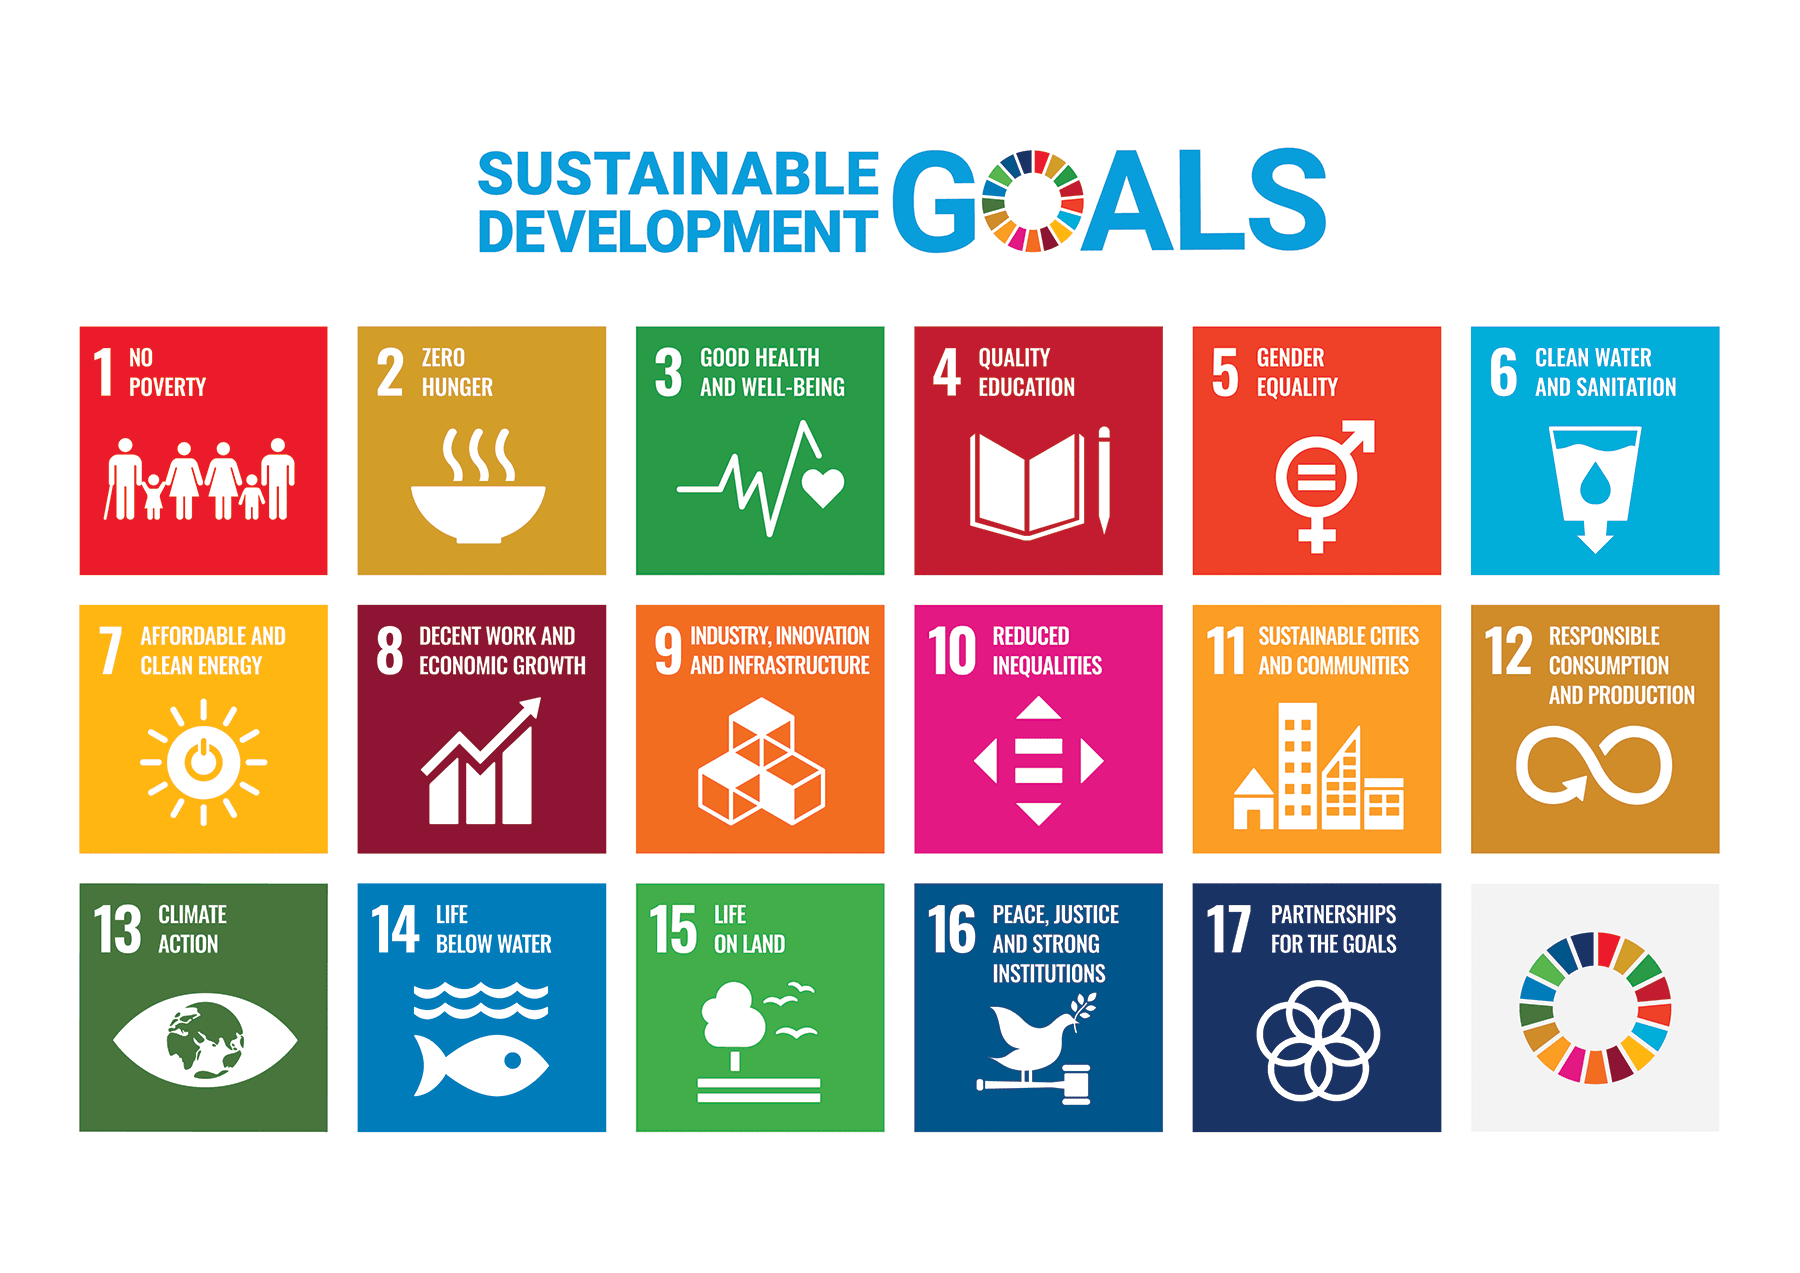 SDGs Initiatives image